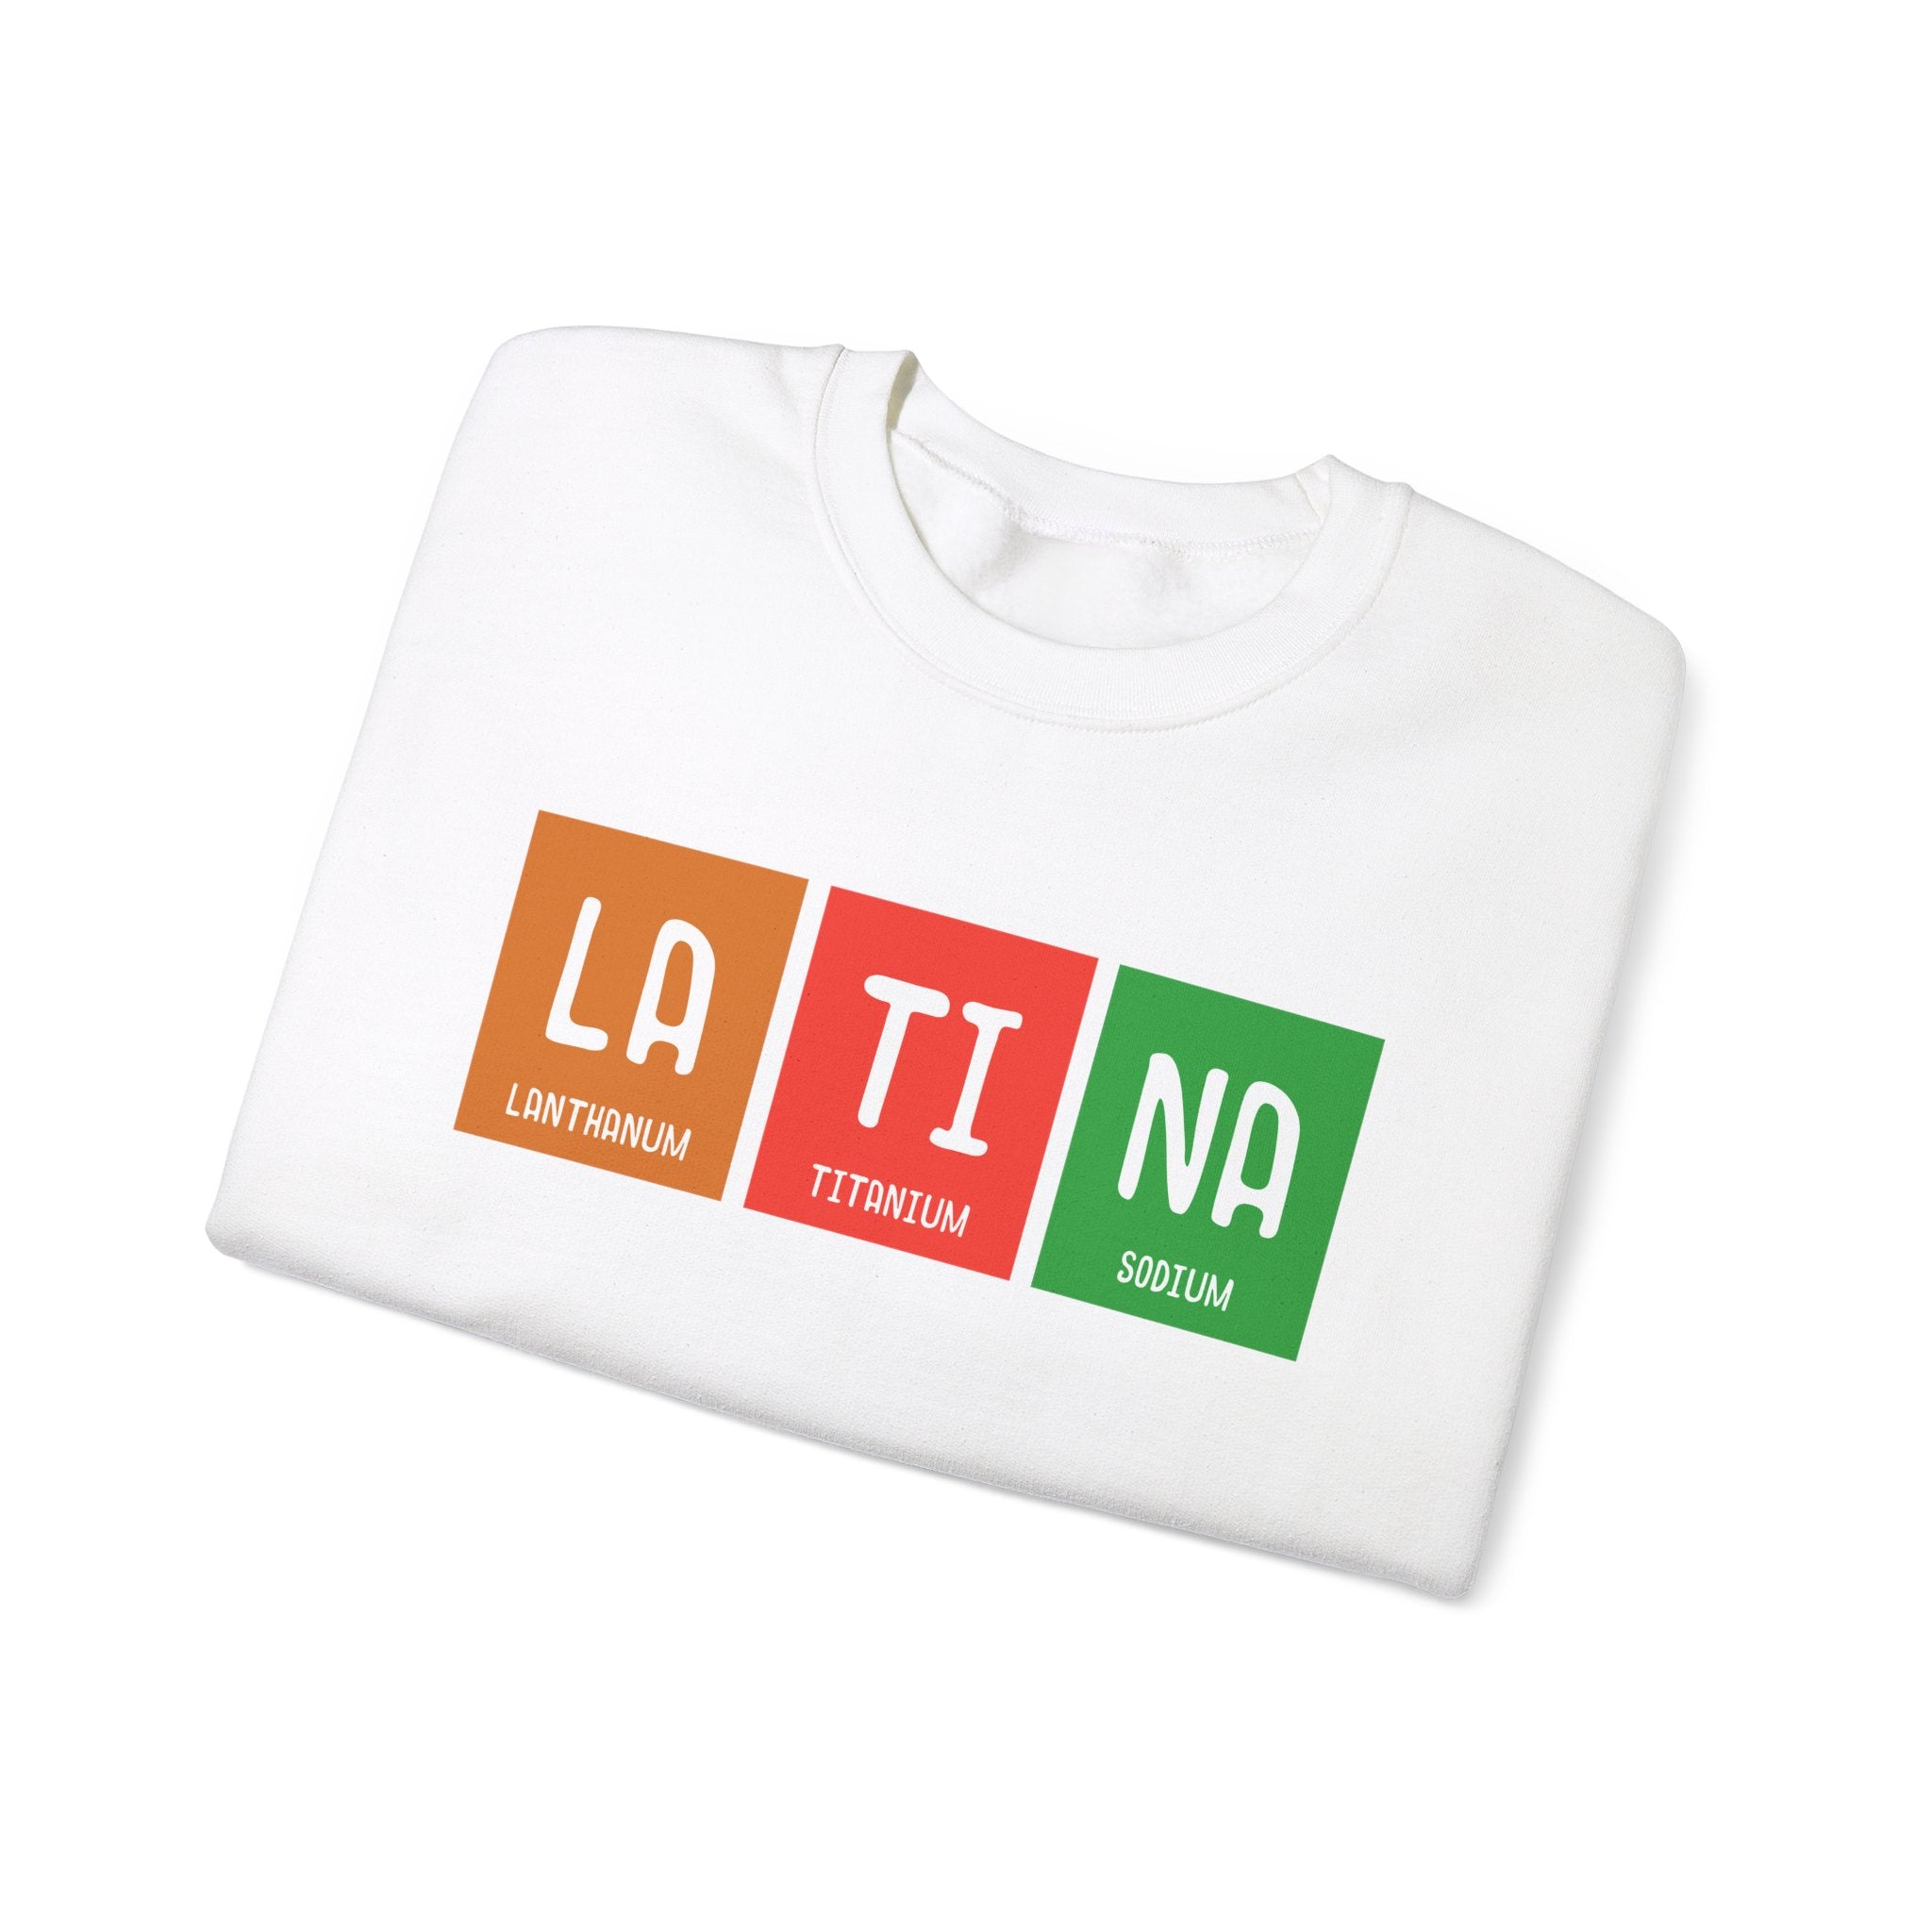 Sweatshirt featuring "LA TI NA" with periodic table symbols for Lanthanum, Titanium, and Sodium, folded neatly—comfort meets style.